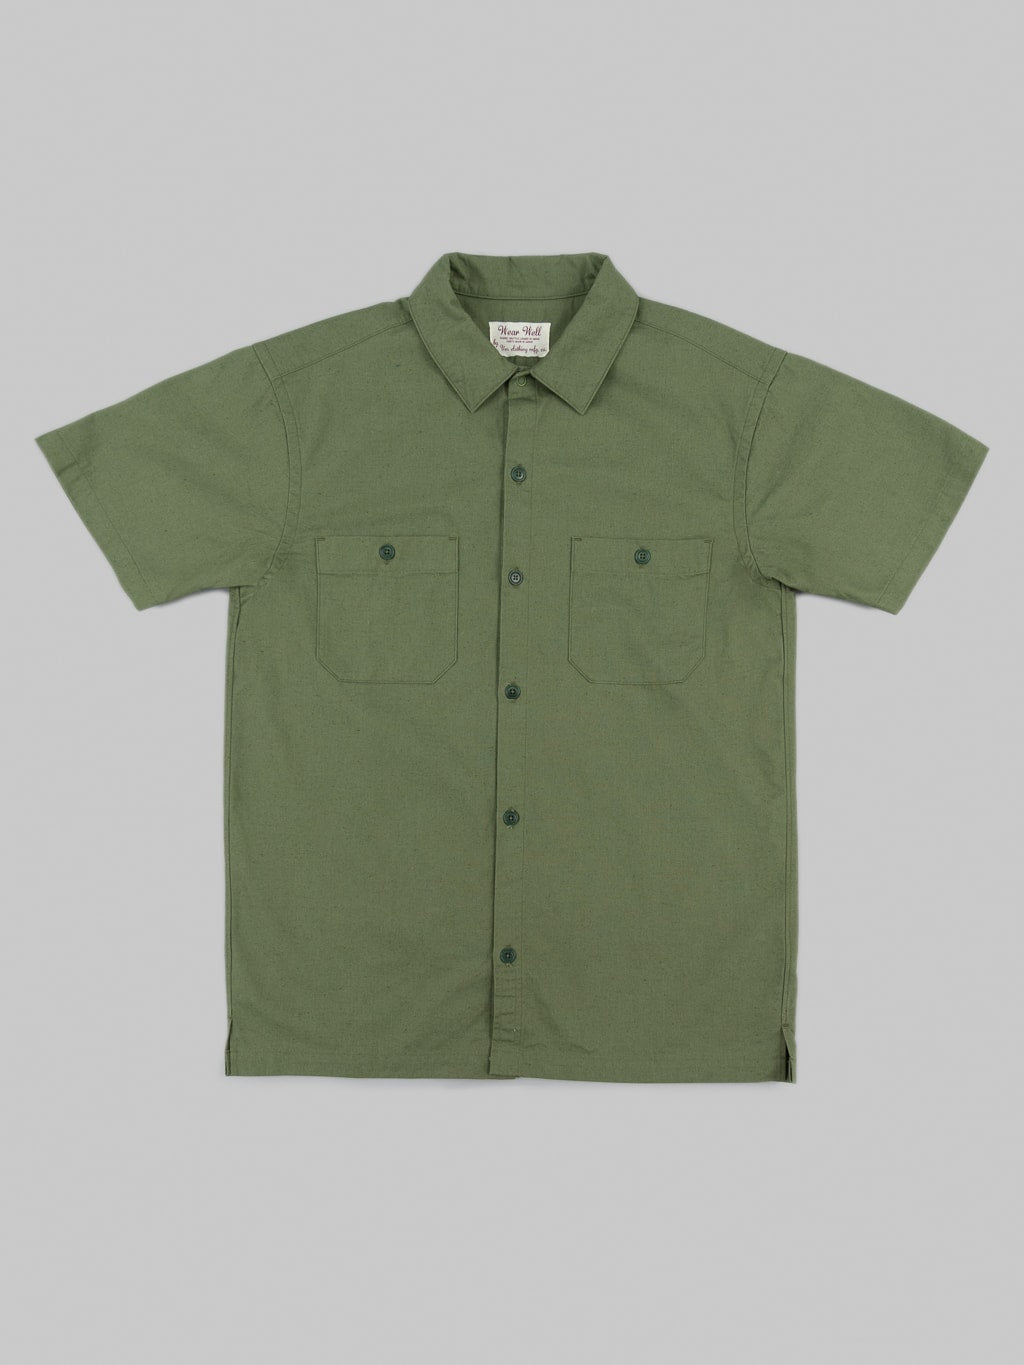 ues denim mechanic shirt sleeves shirt sage green